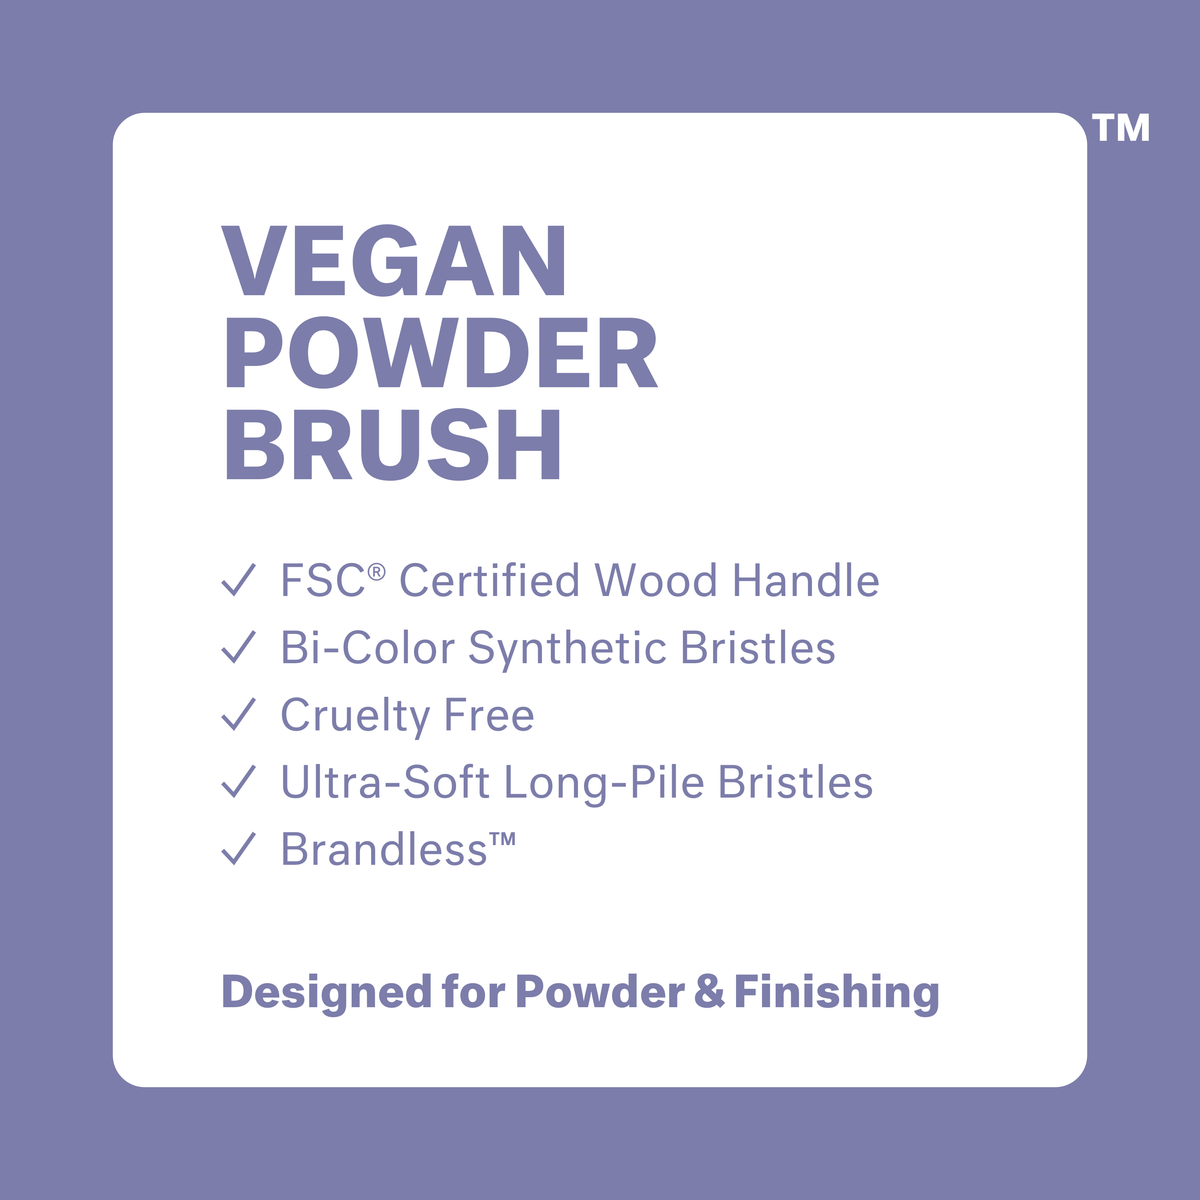 Vegan Powder Brush: FSC certified wood handle, bi-color synthetic bristles, cruelty free, ultra-soft long-pile bristles, brandless. Designed for powder and finishing.